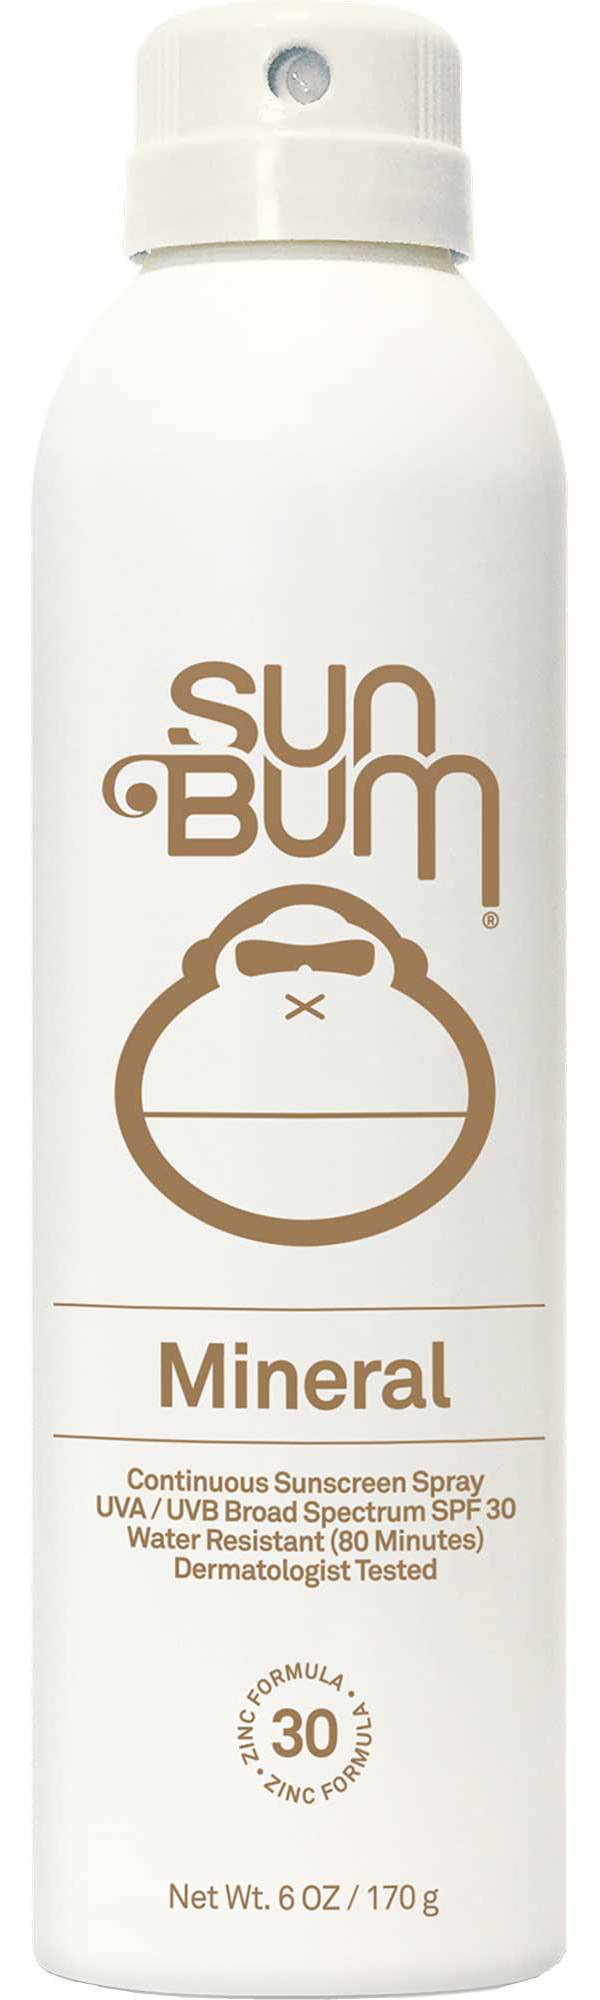 Sun Bum SPF 30 Mineral Sunscreen Spray product image